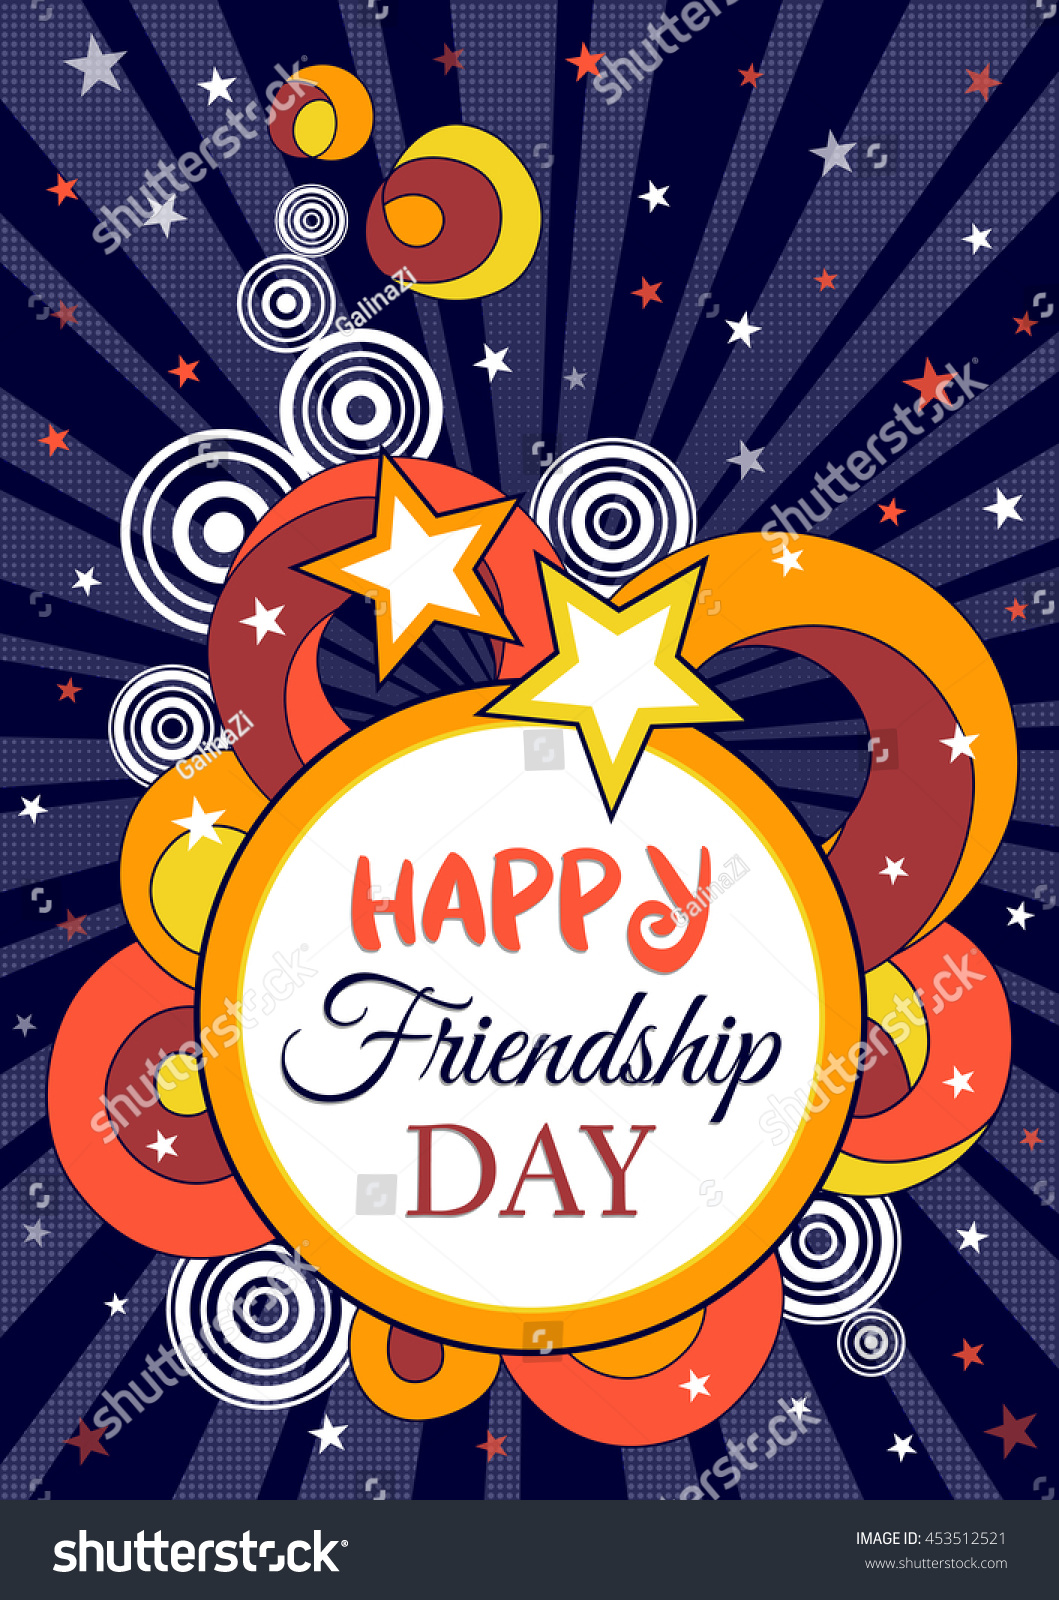 Happy Friendship Day Design Vector Illustration Stock Vector 453512521